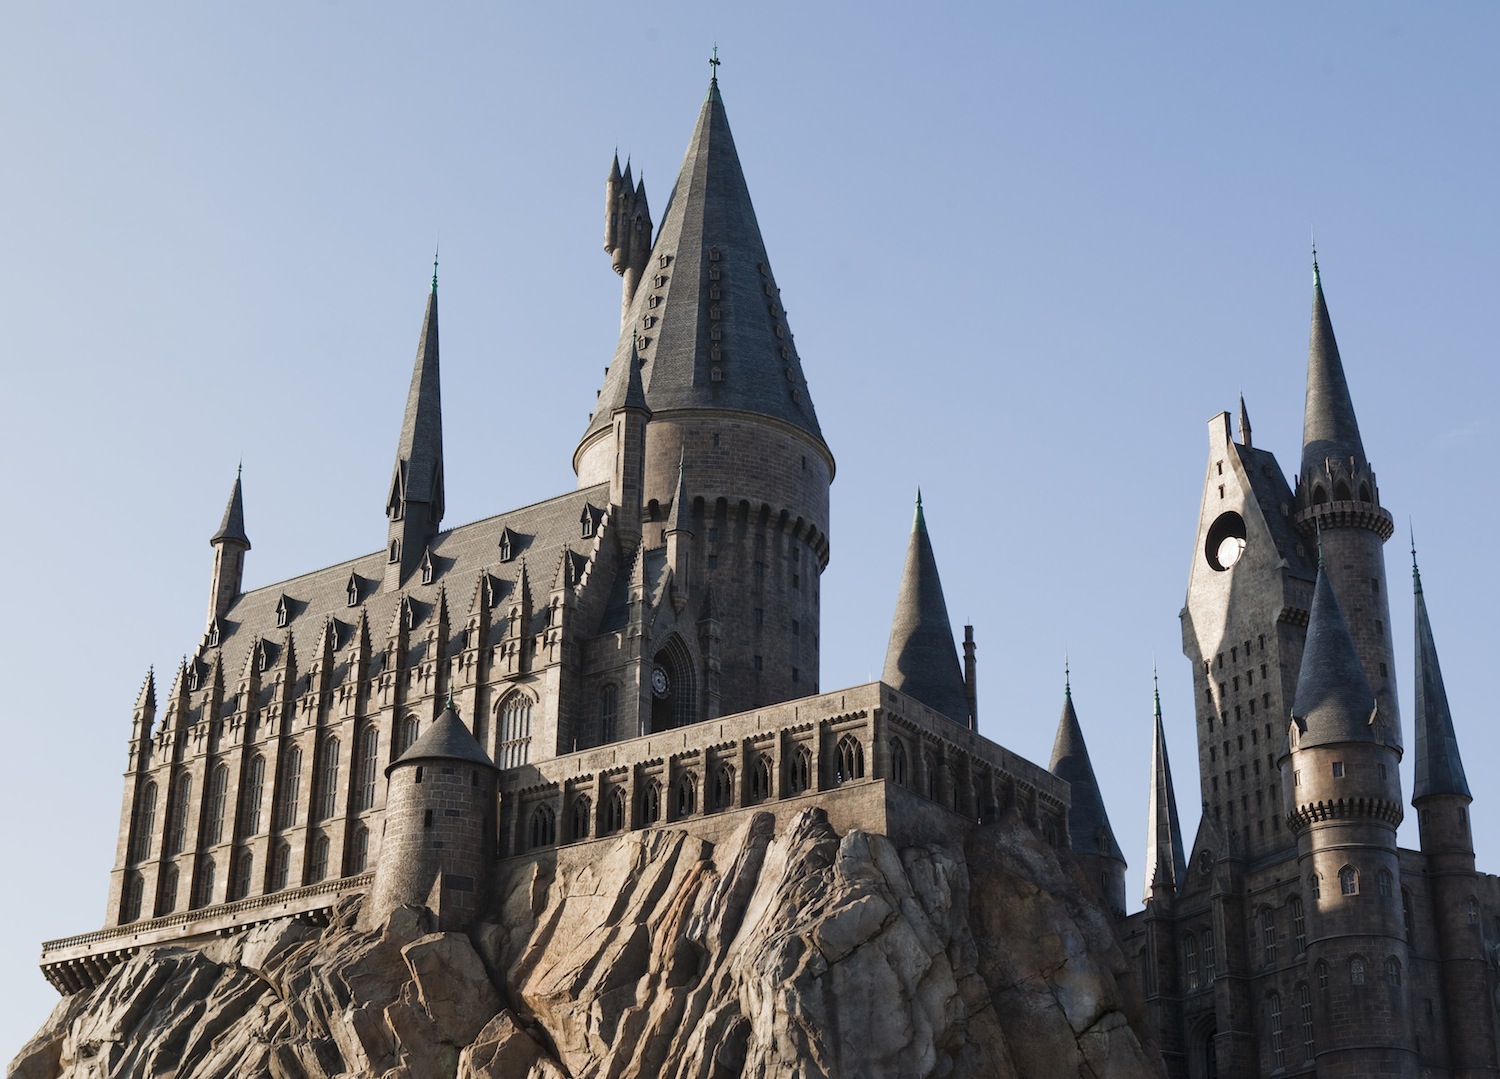 Hogsmeade-Hogwarts-Wizarding-World-of-Harry-Potter-and-the-forbidden-journey-Islands-of-Adventure-Universal-Orlando-controle-qualite